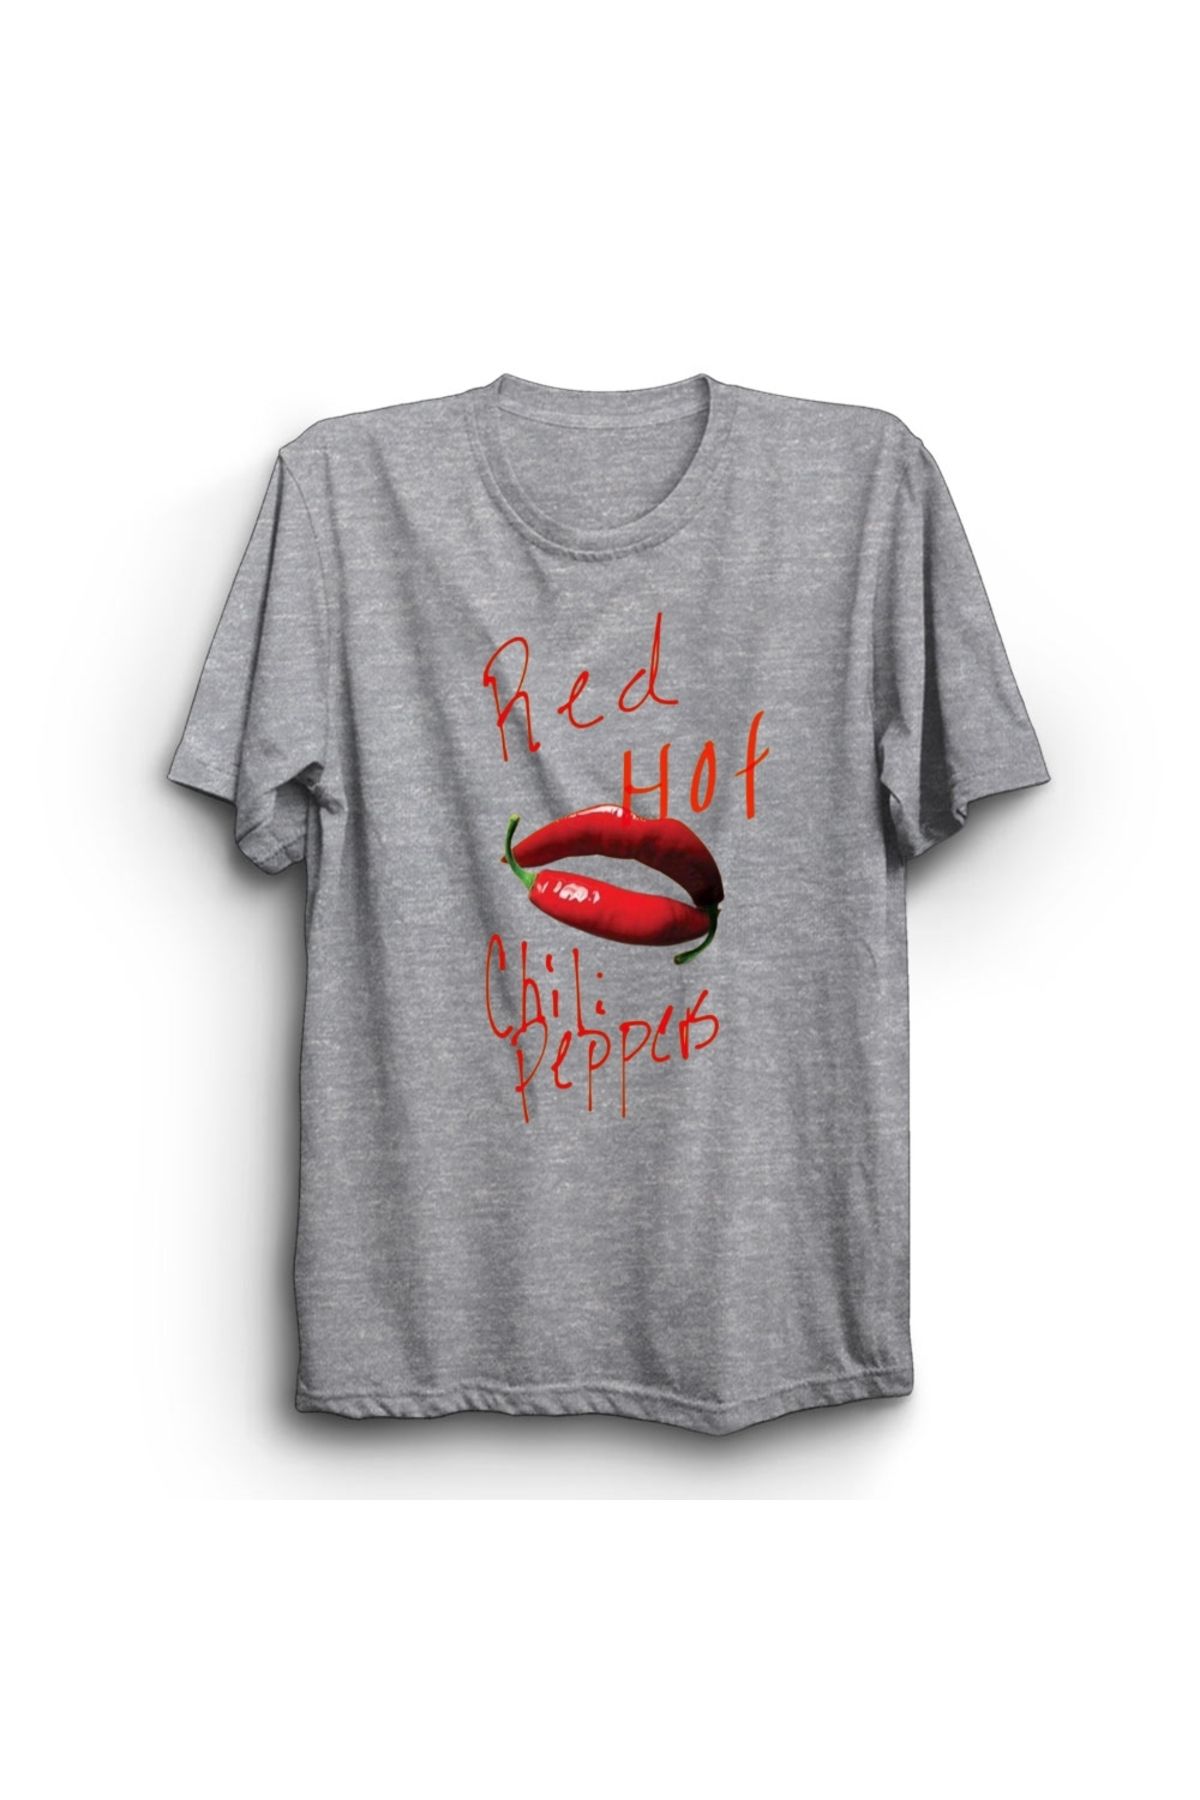 The Fame Red Hot Chili Peppers, Pepper Lips, Rock Metal Müzik Grubu Tişörtü